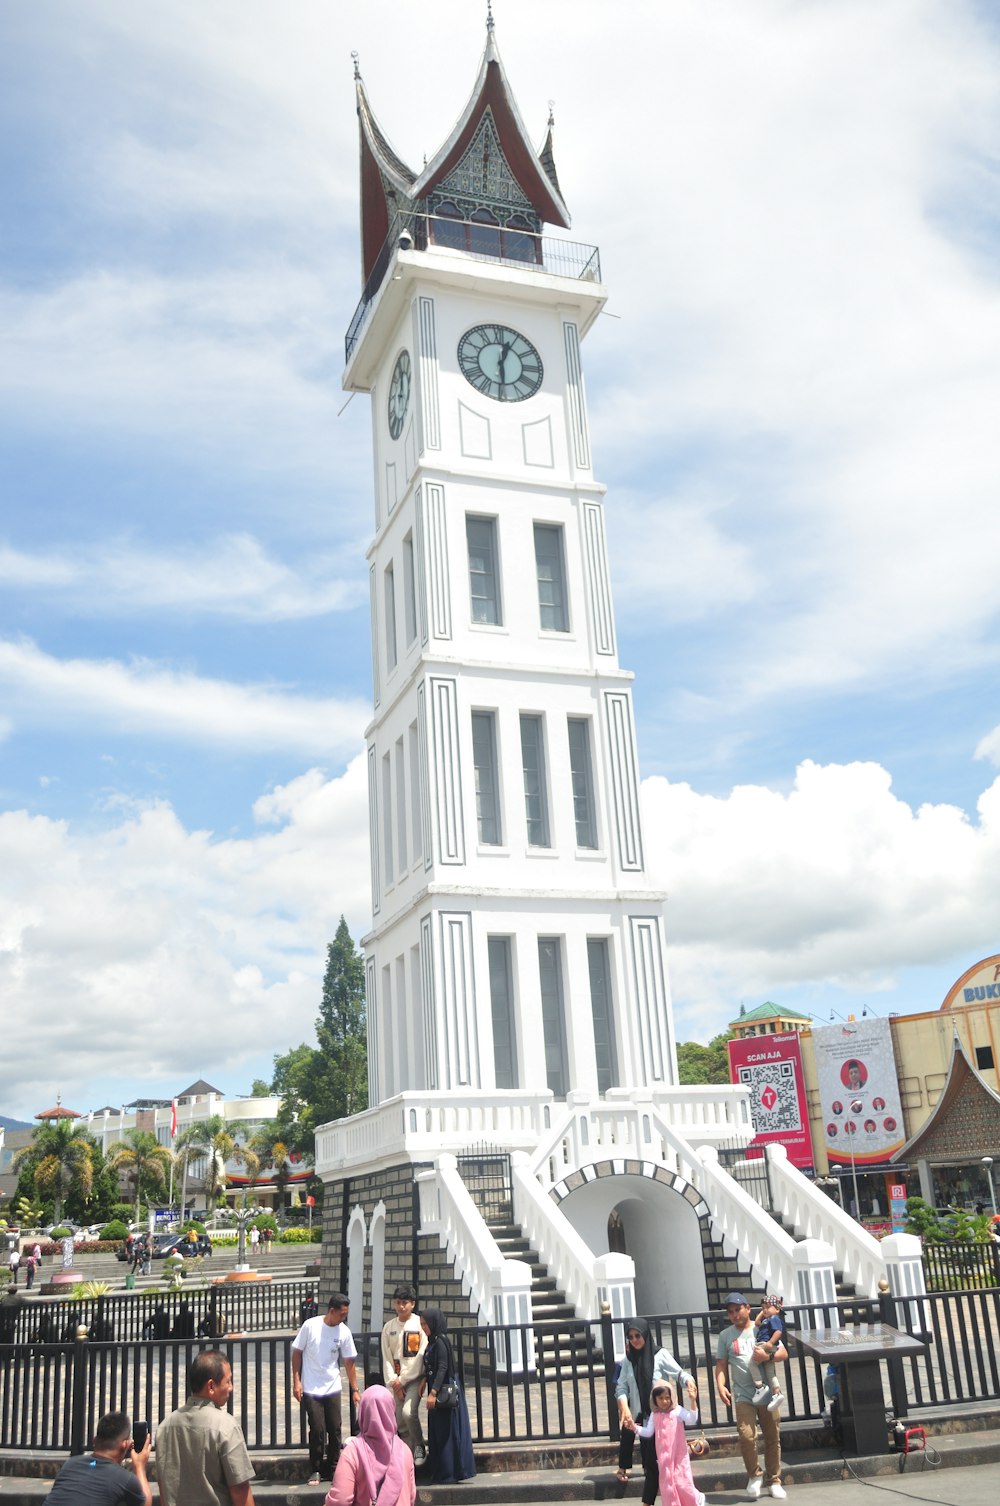 a clock tower in Jam Gadang